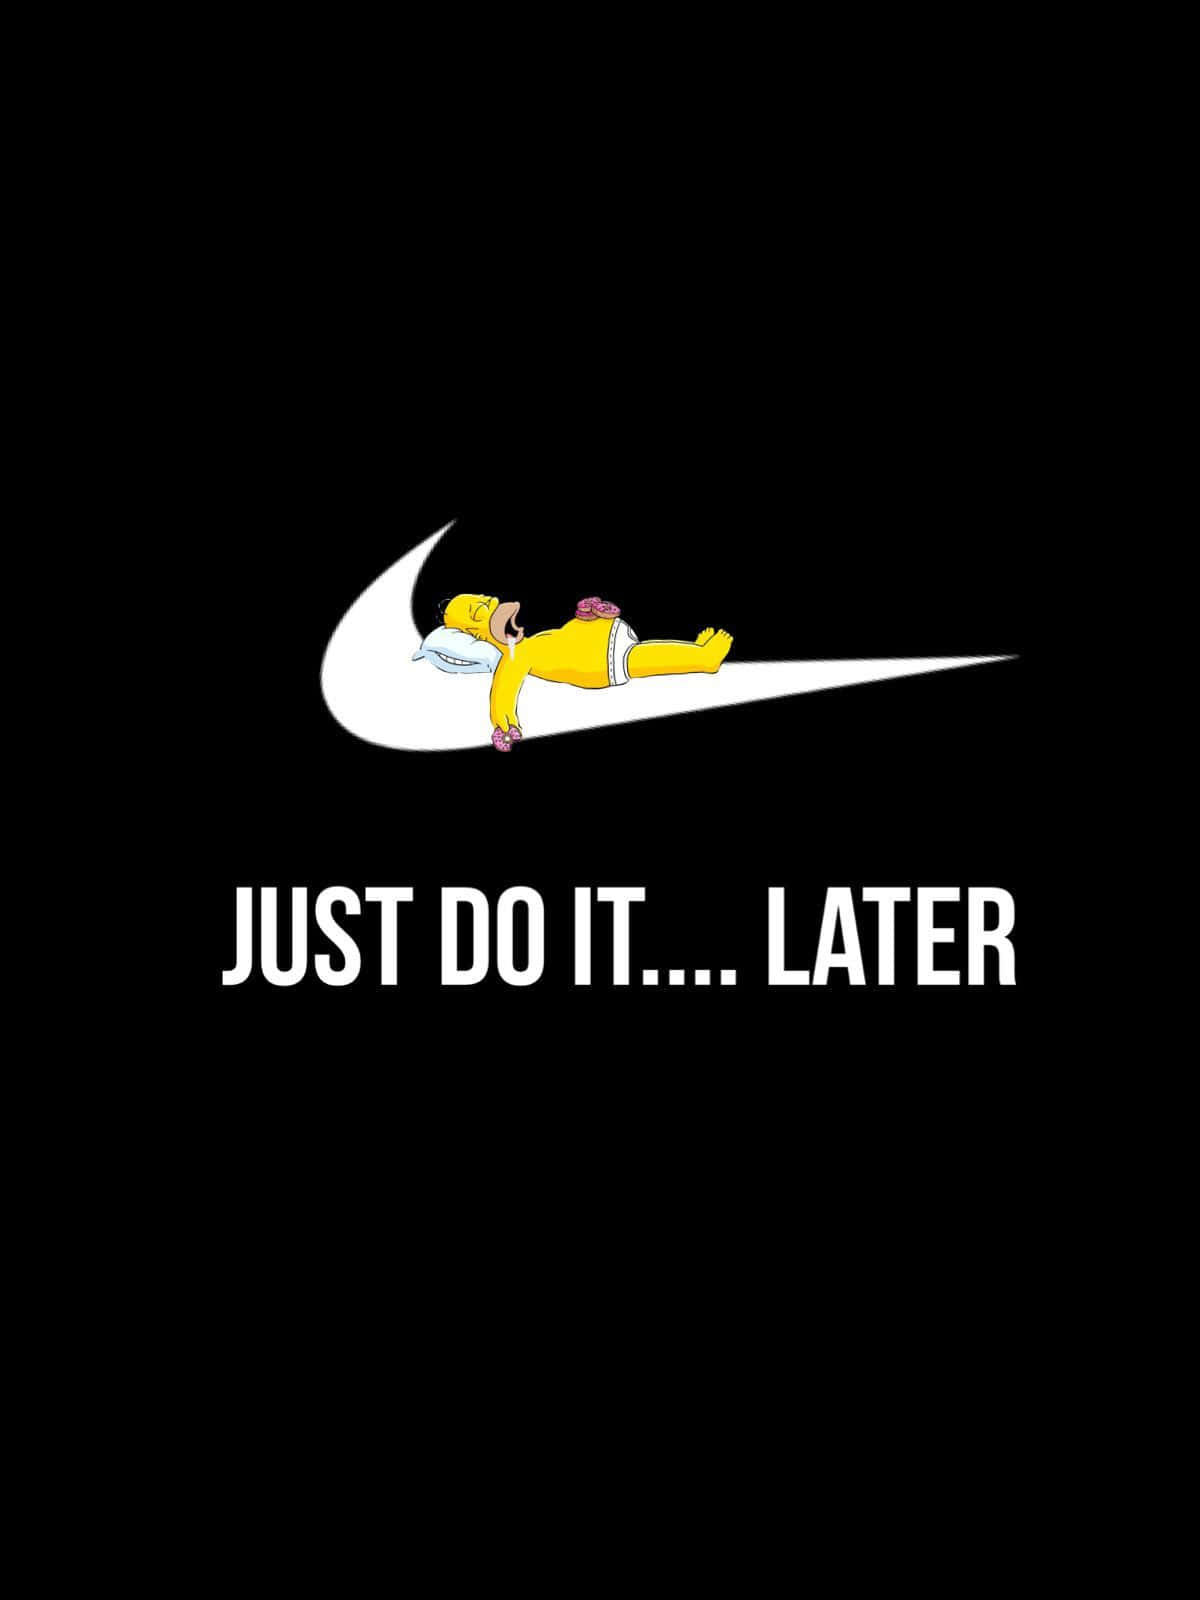 Nike Just Do It Later Wallpaper Wallpaper